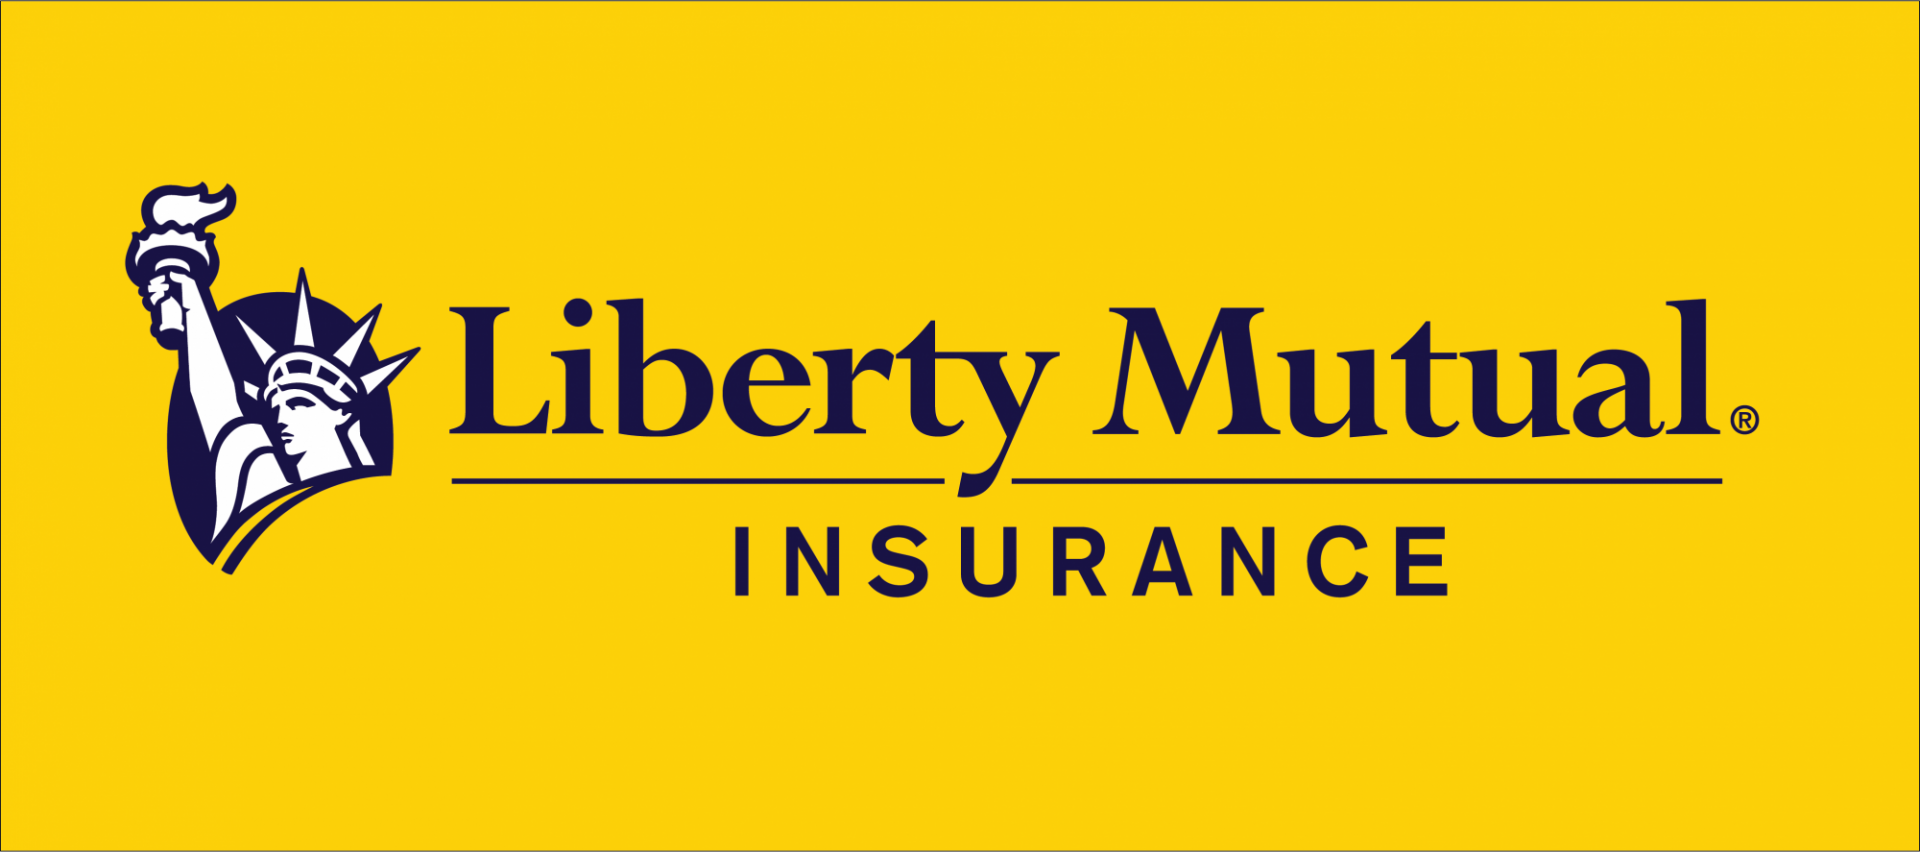 The logo for Liberty Mutual Insurance.